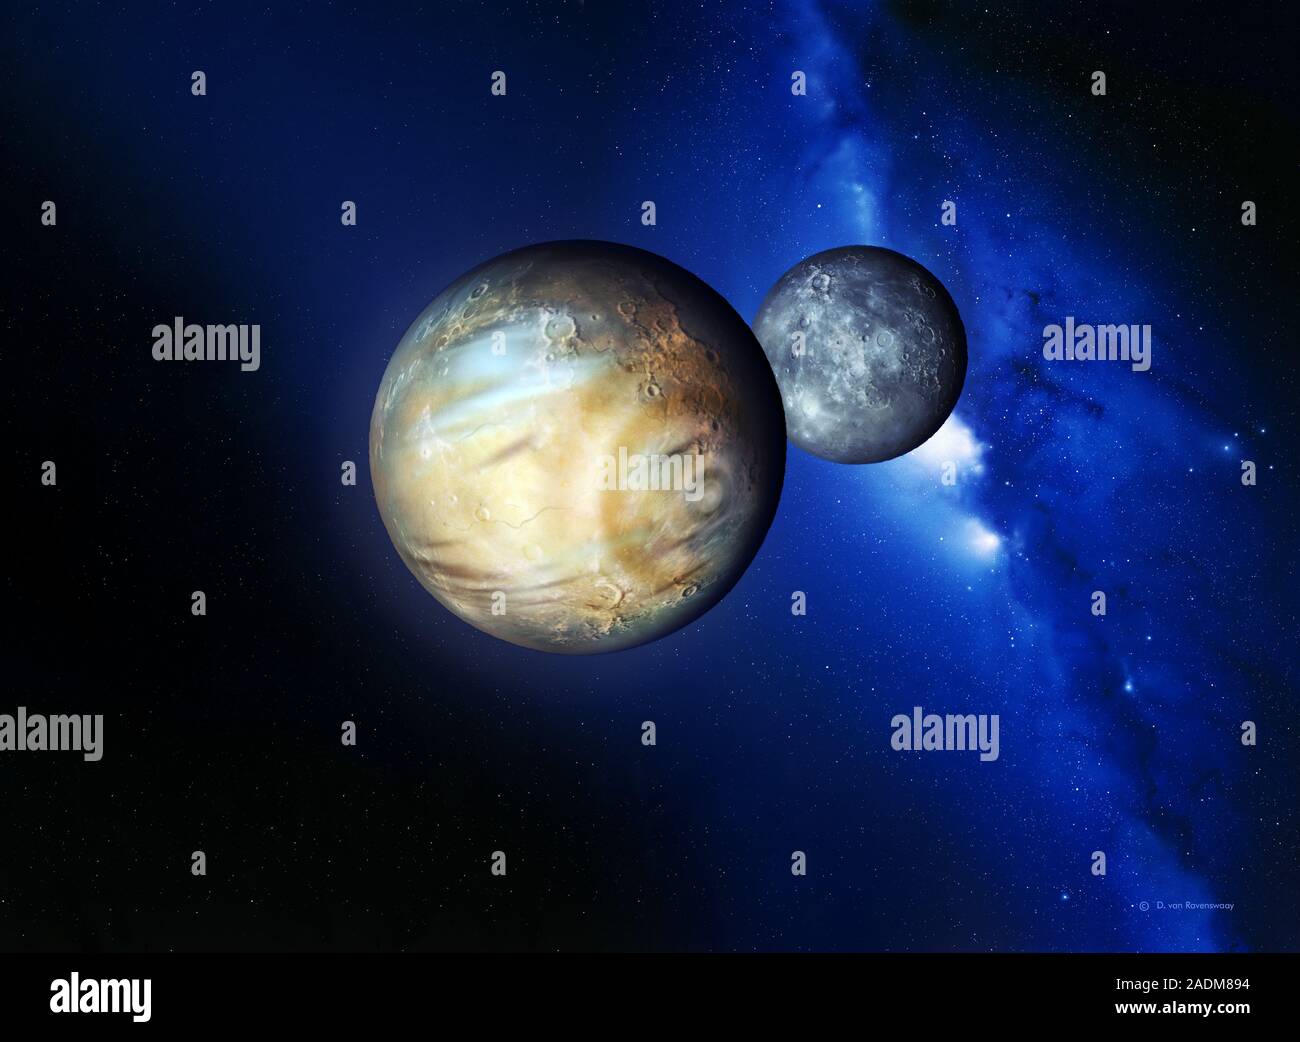 плутон в солнечной системе картинки